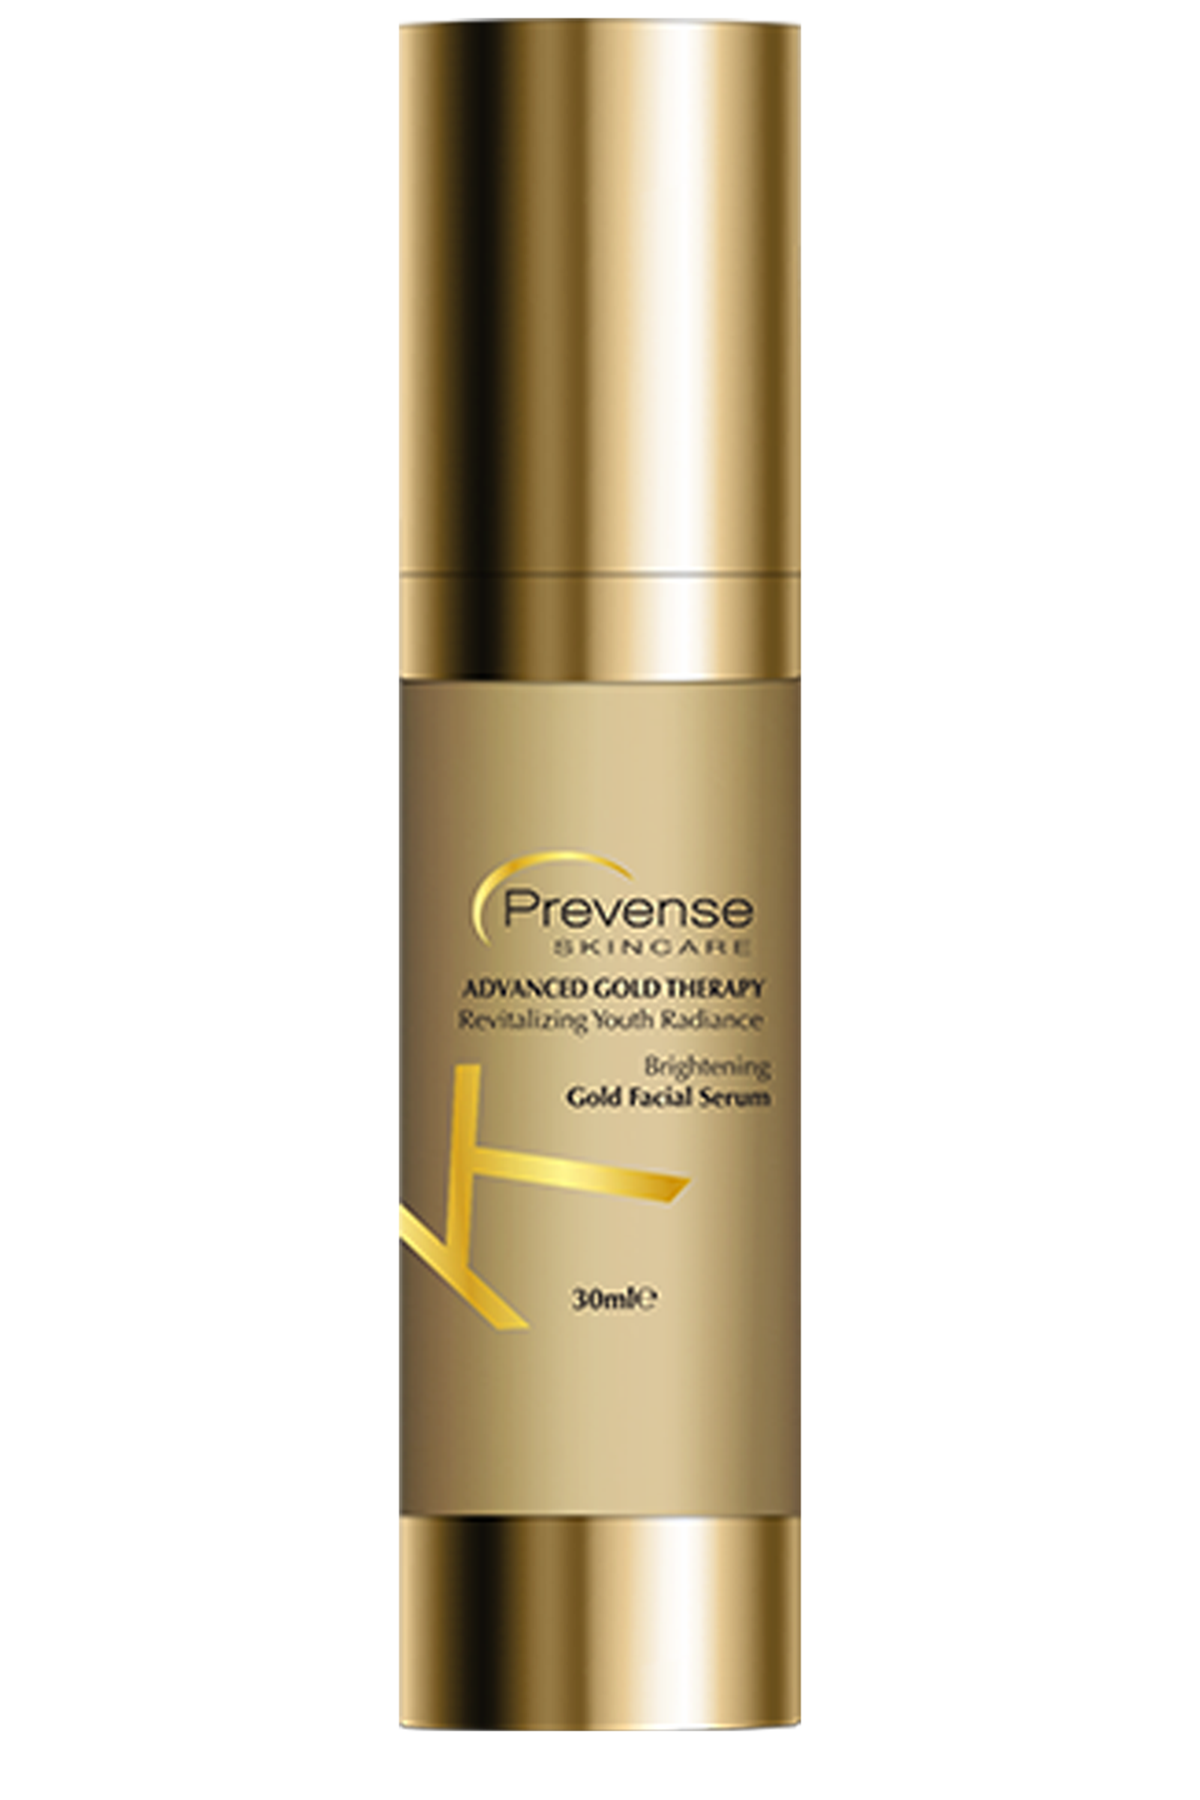 Prevense Brightening Gold Facial Serum (30ml)